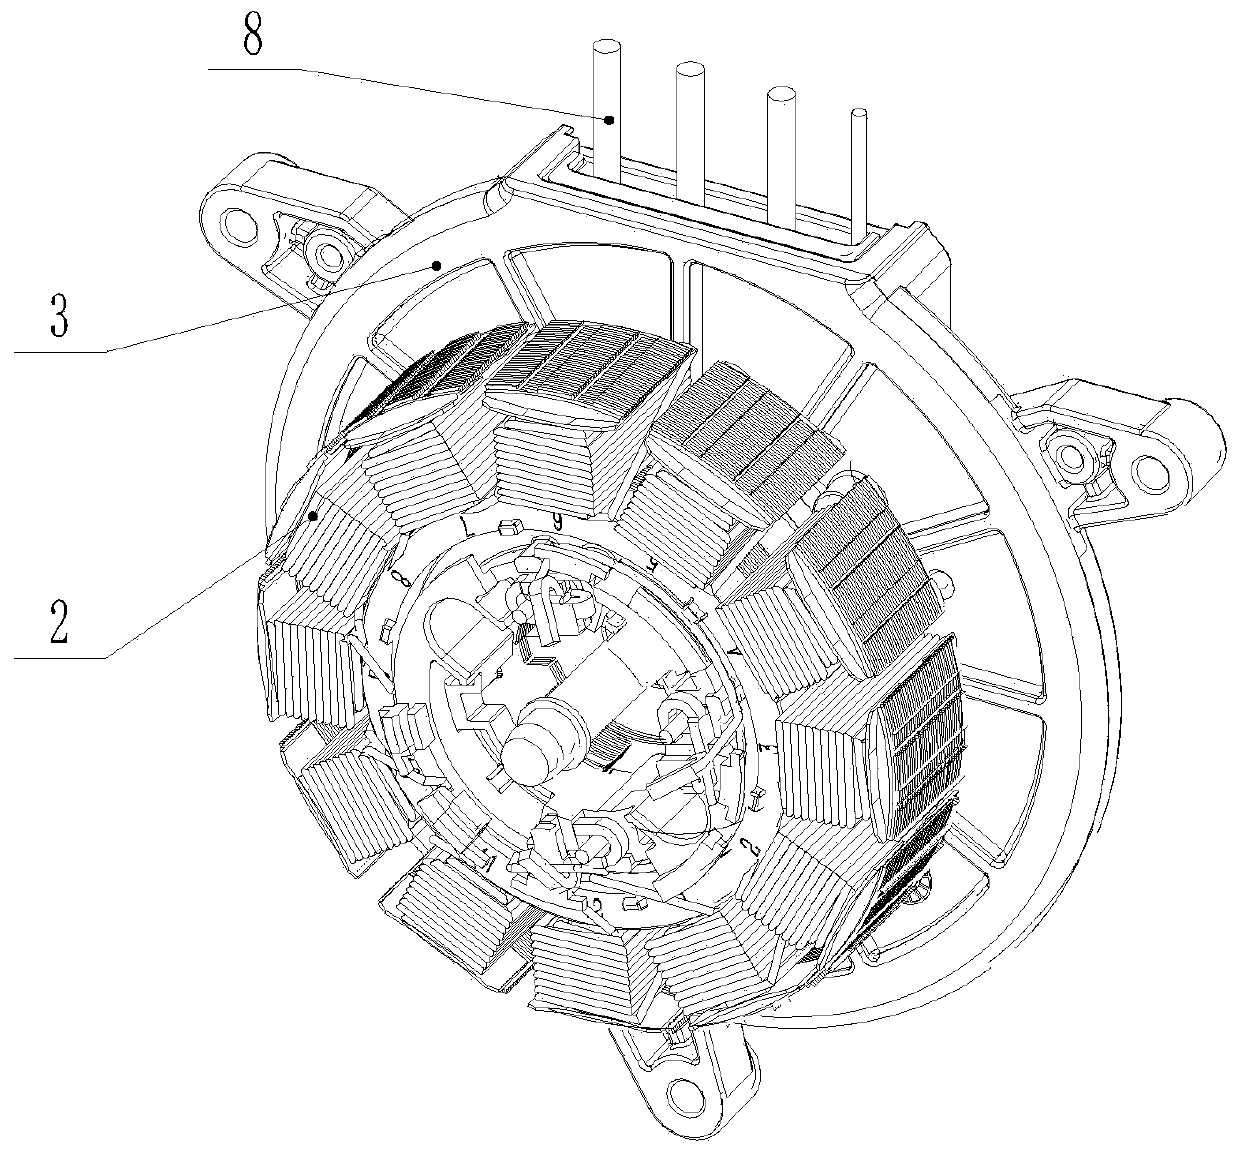 Motor main body of automobile cooling fan